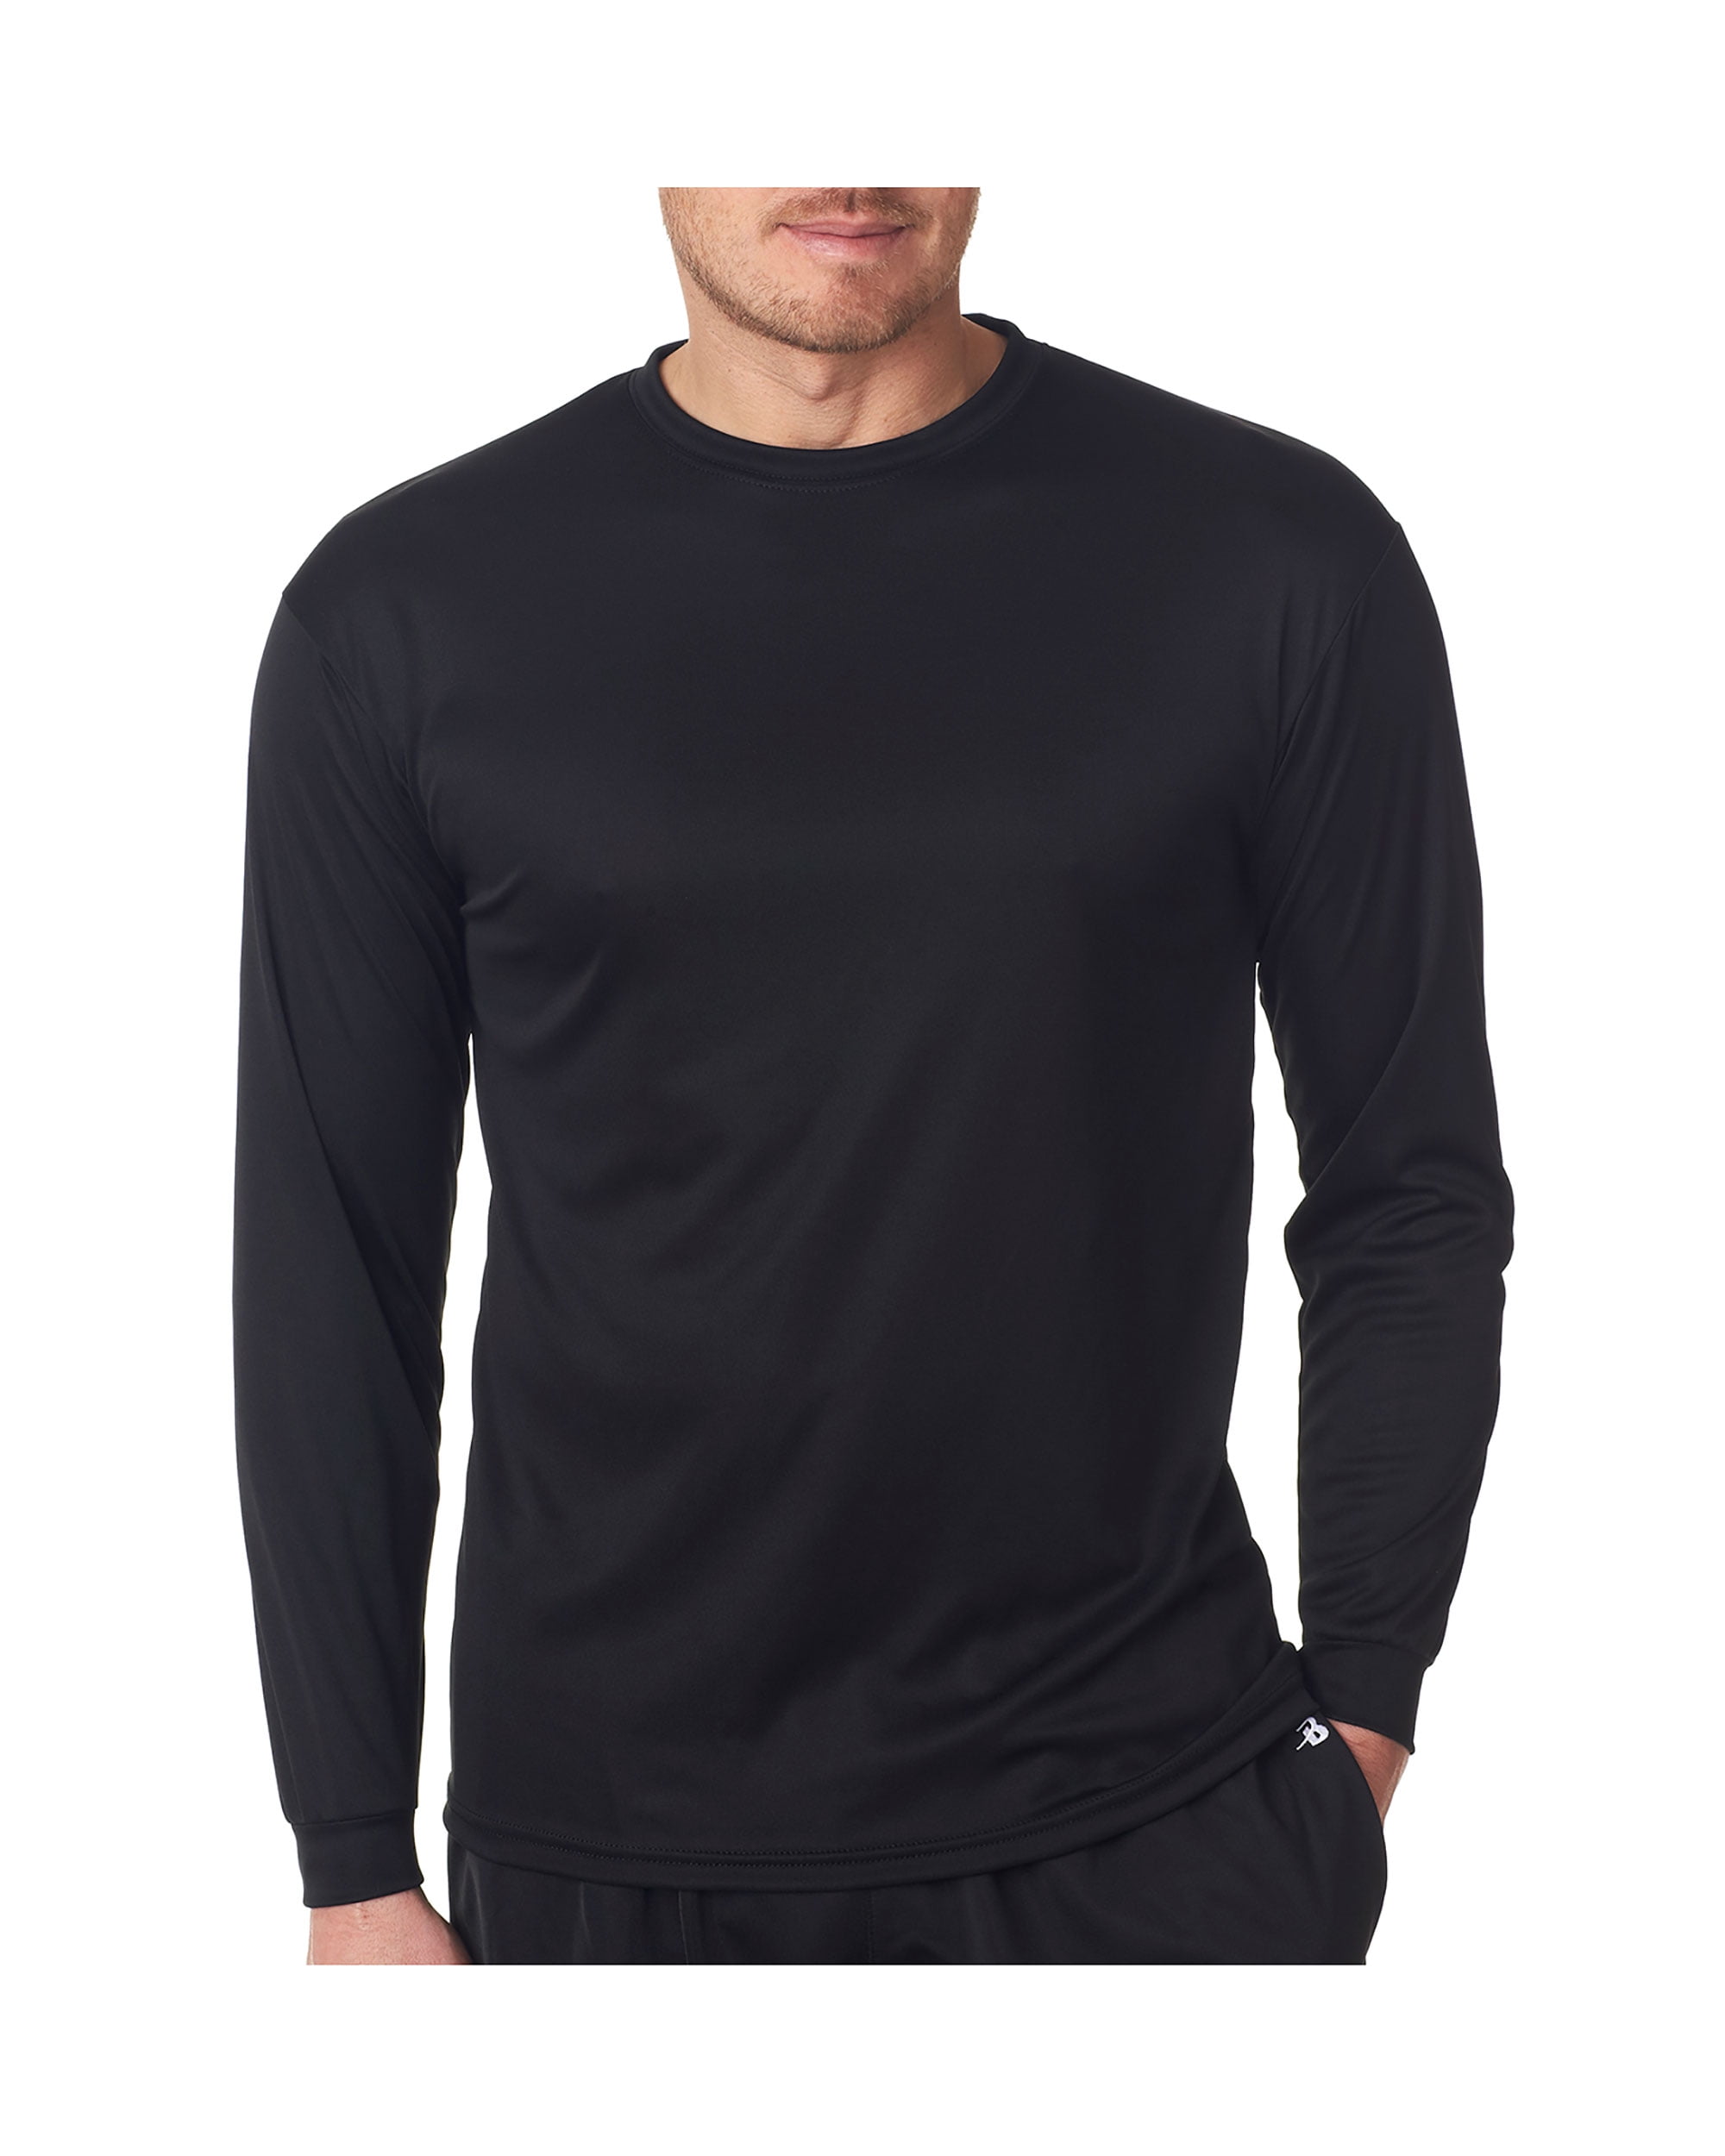 C2 Sport Men's 100% Poly Performance Long-Sleeve T-Shirt, Style 5104 ...